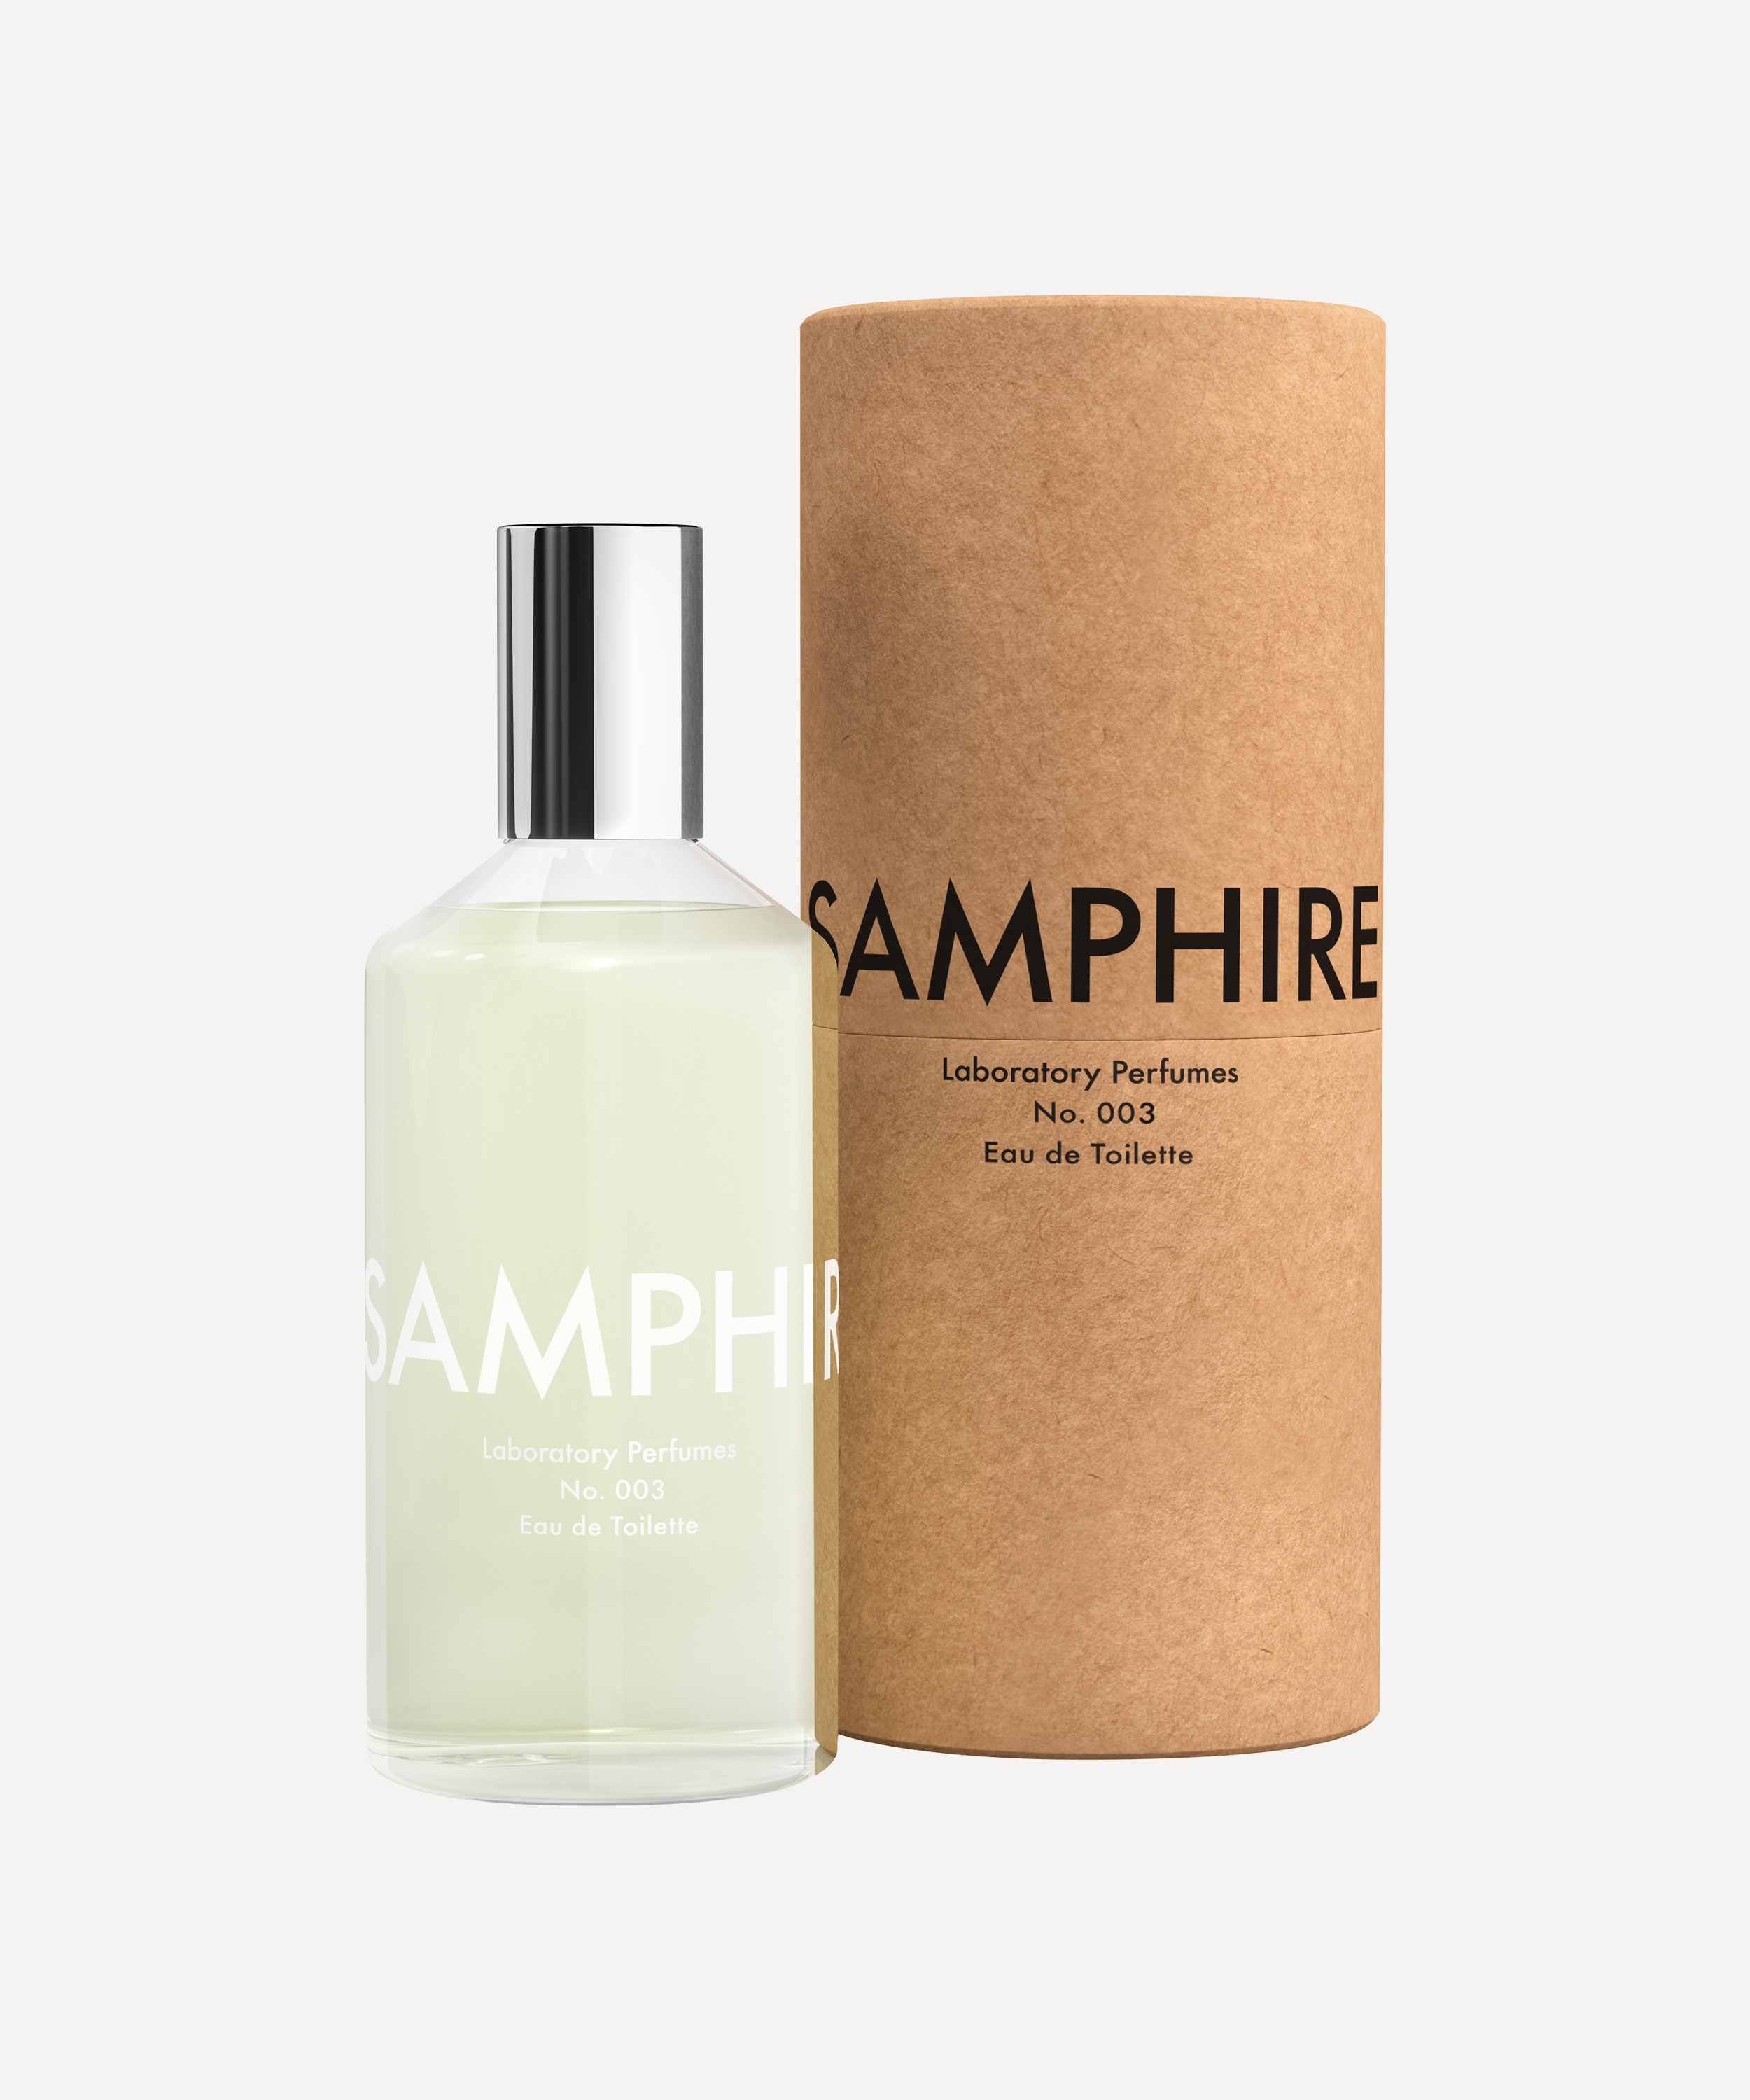 Laboratory Perfumes - No. 003 Samphire Eau de Toilette 100ml